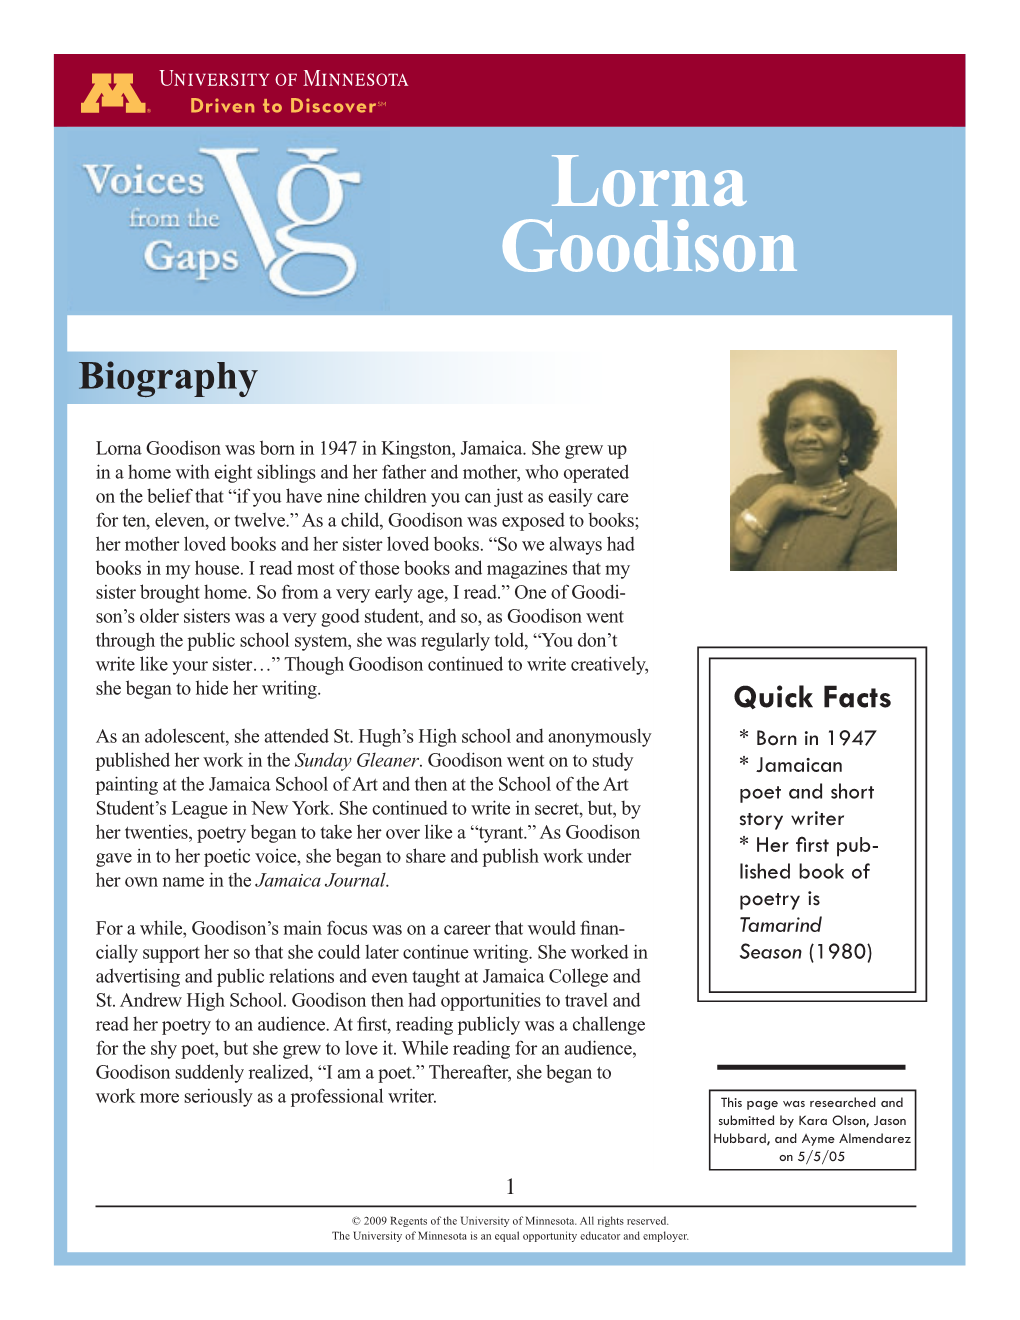 Lorna Goodison